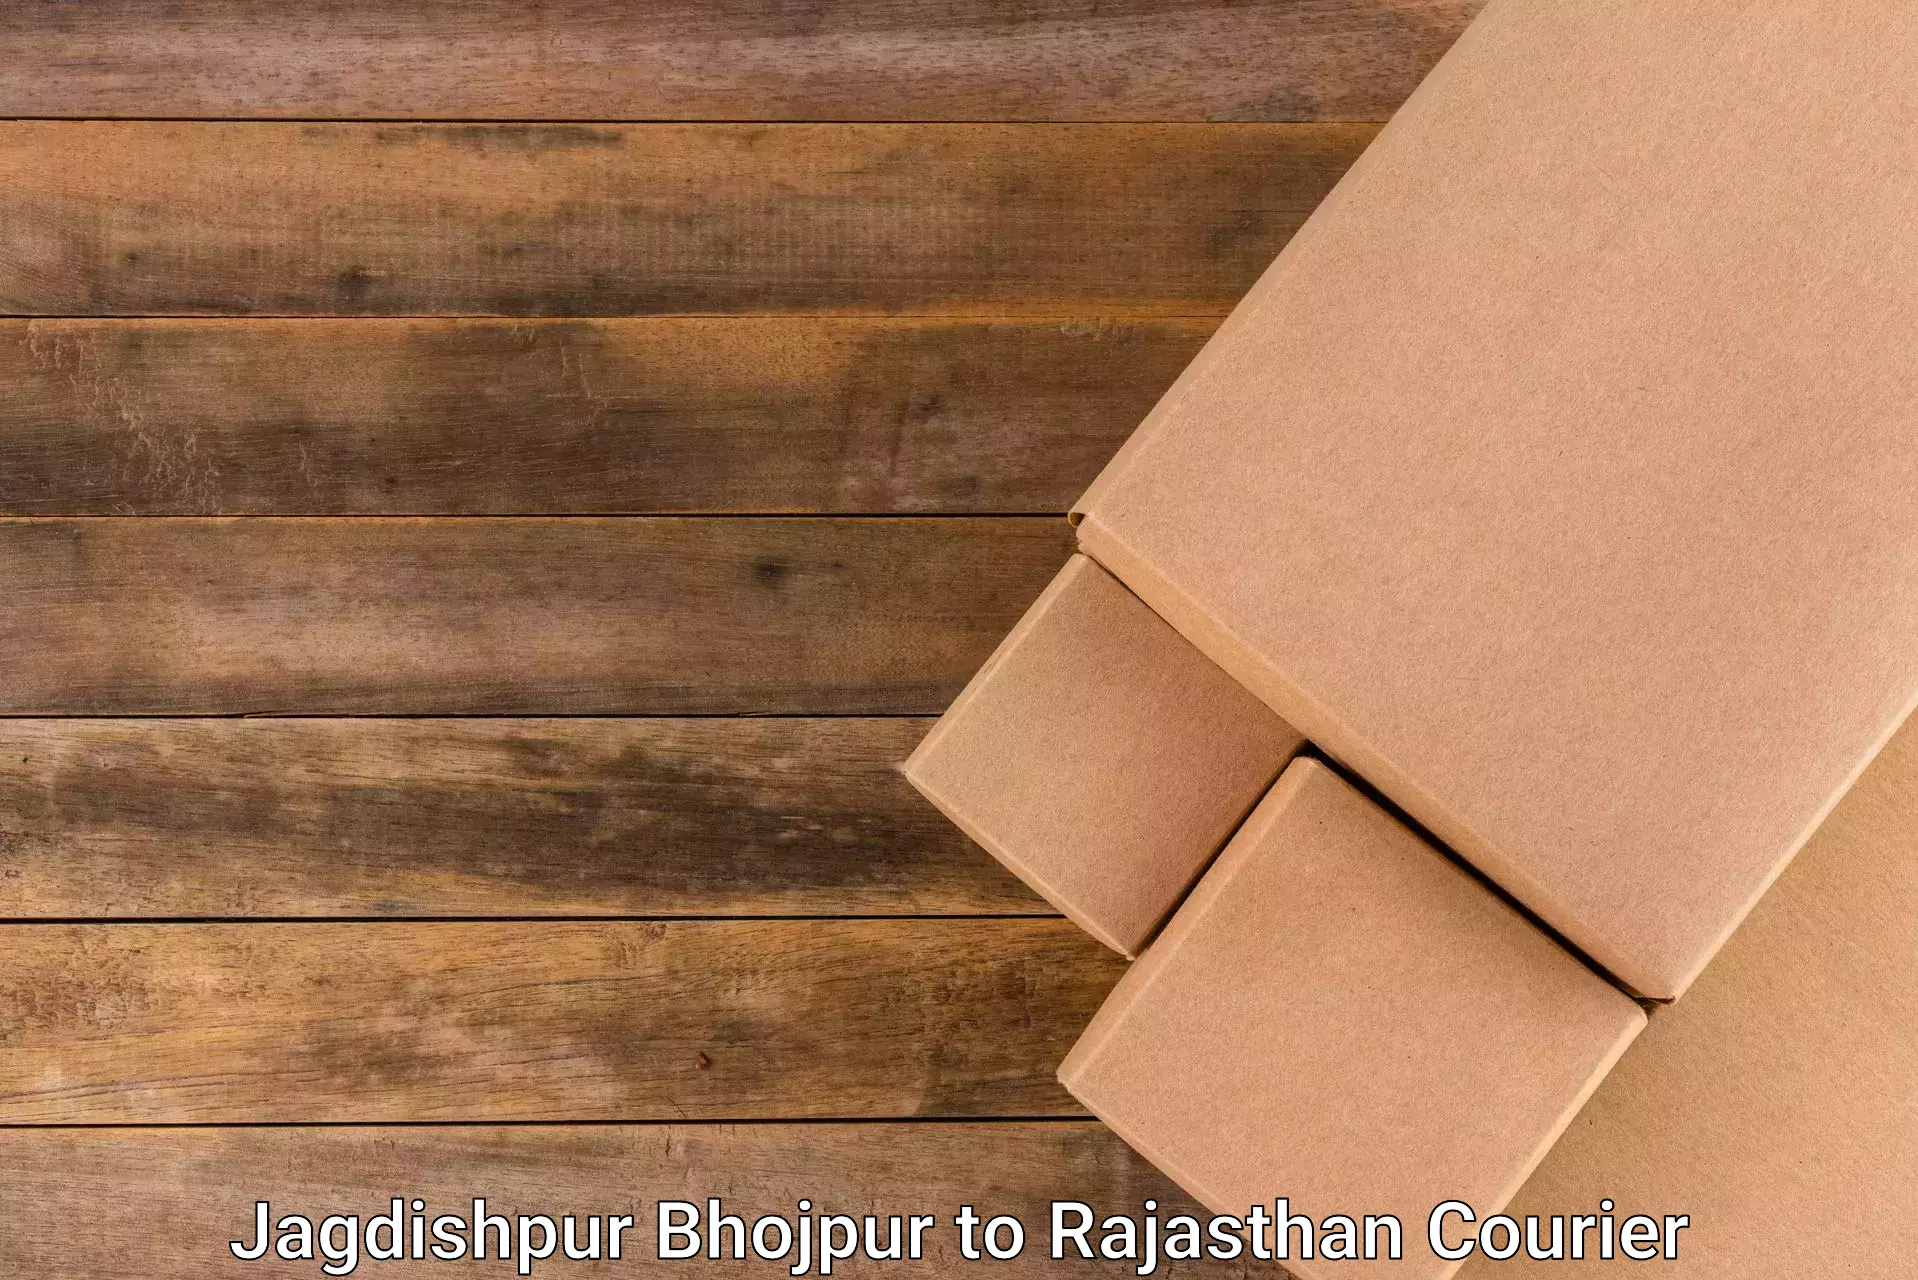 Supply chain delivery Jagdishpur Bhojpur to Jodhpur